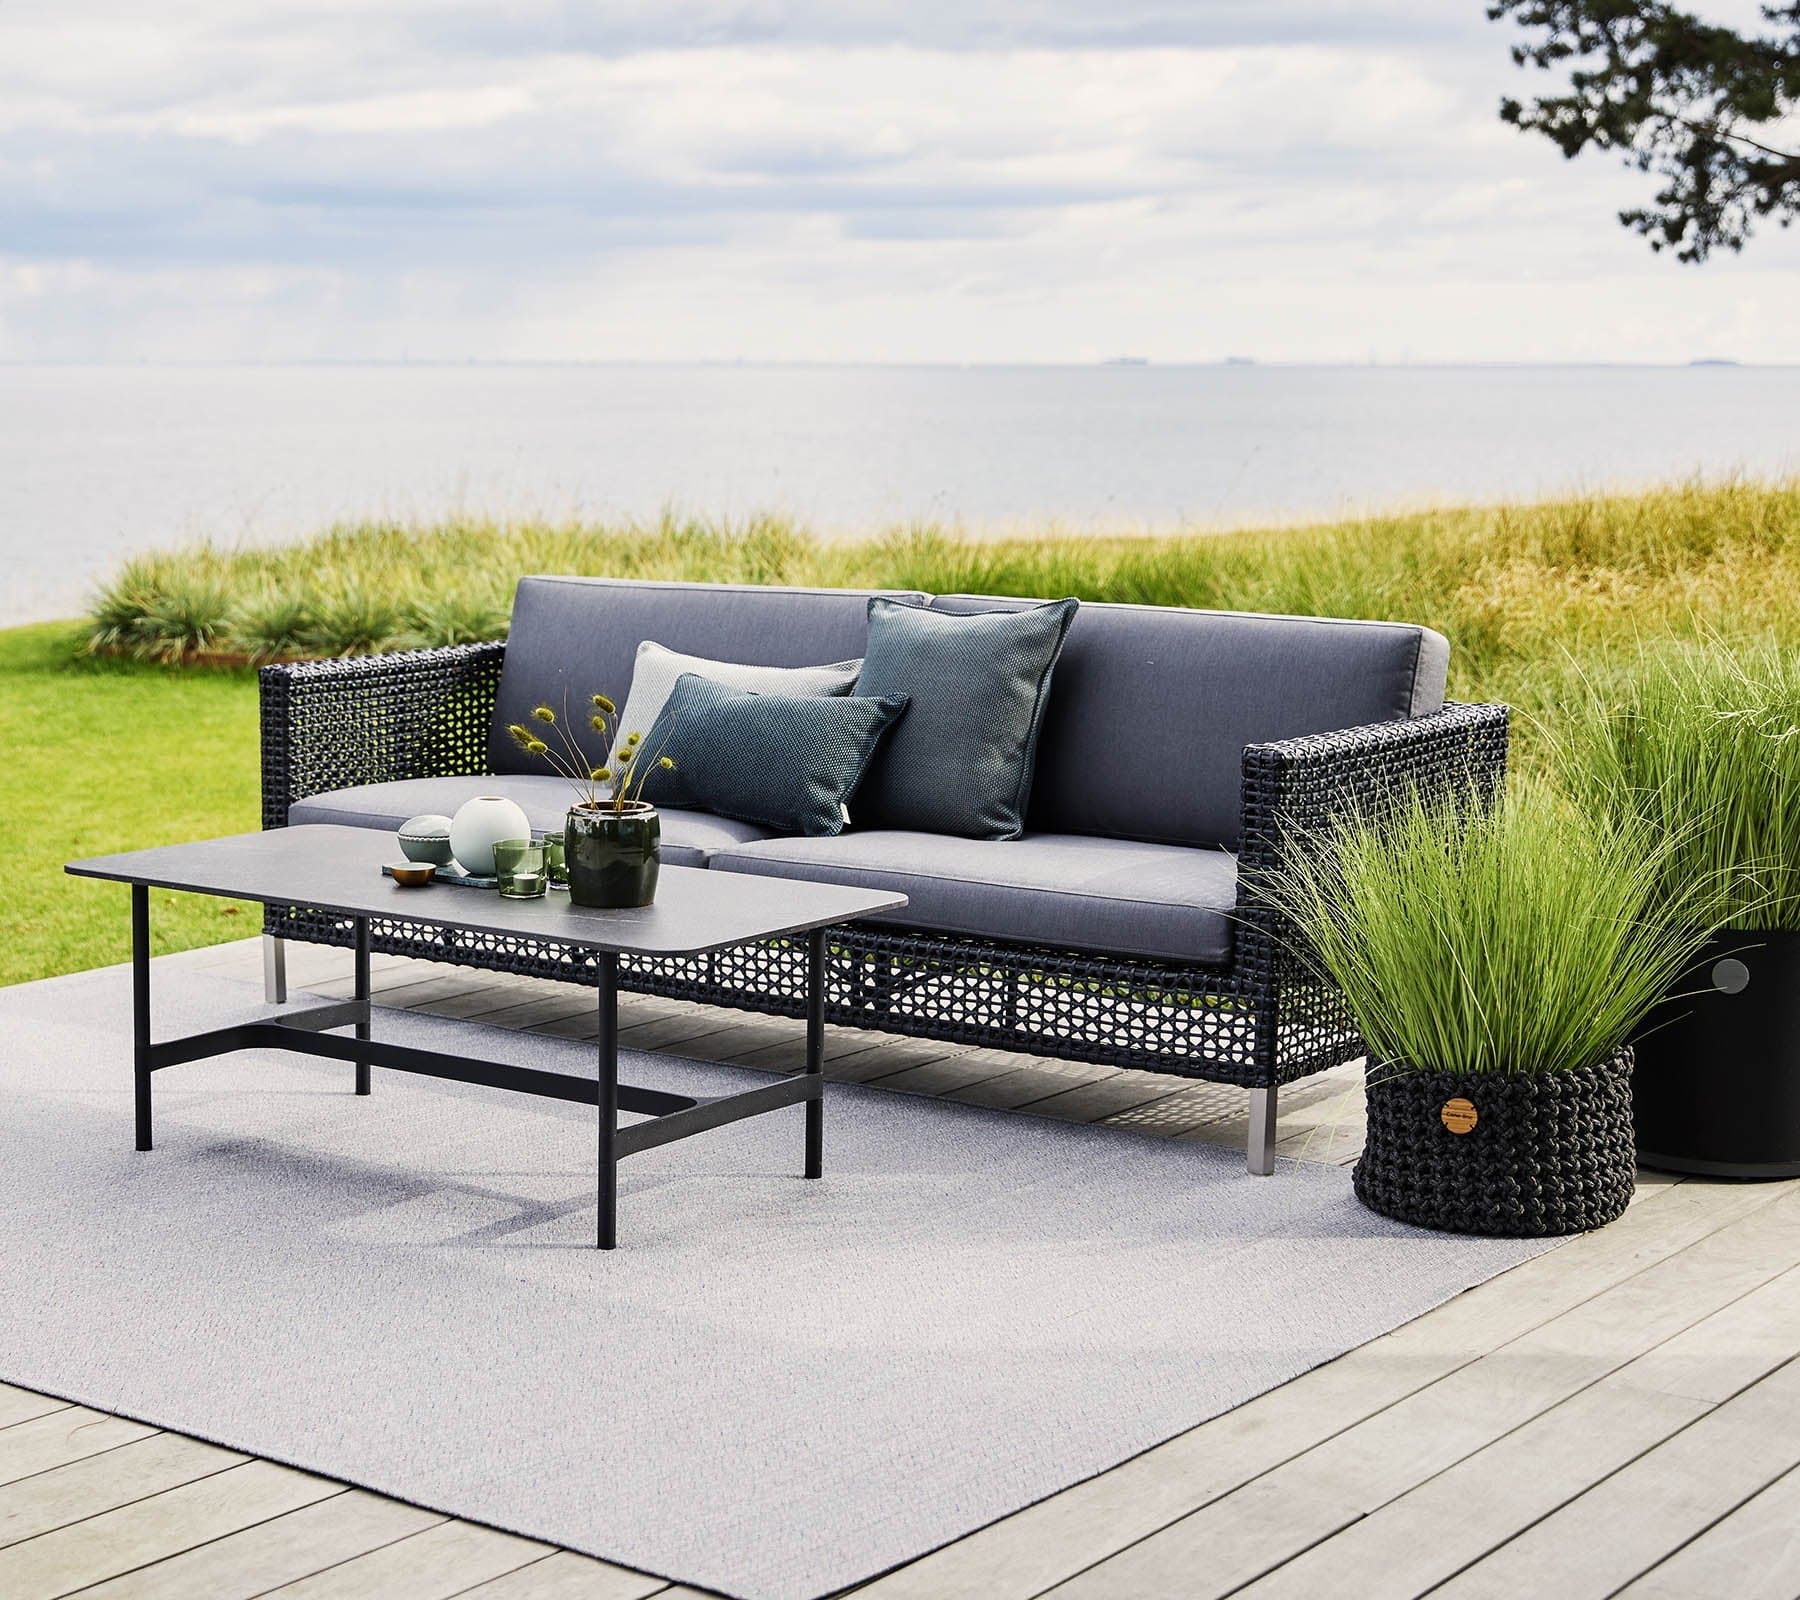 Boxhill's Twist dark grey rectangular outdoor coffee table with dark grey sofa placed on wooden platform beside grassy field